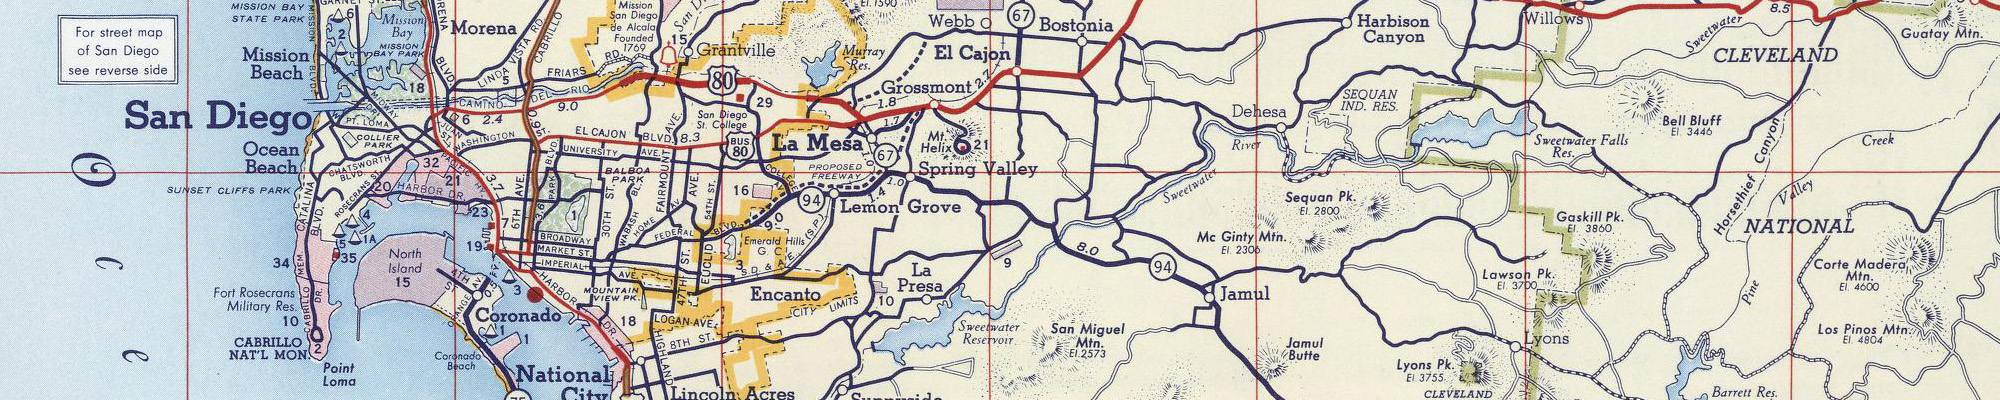 segment of San Diego street map 1956